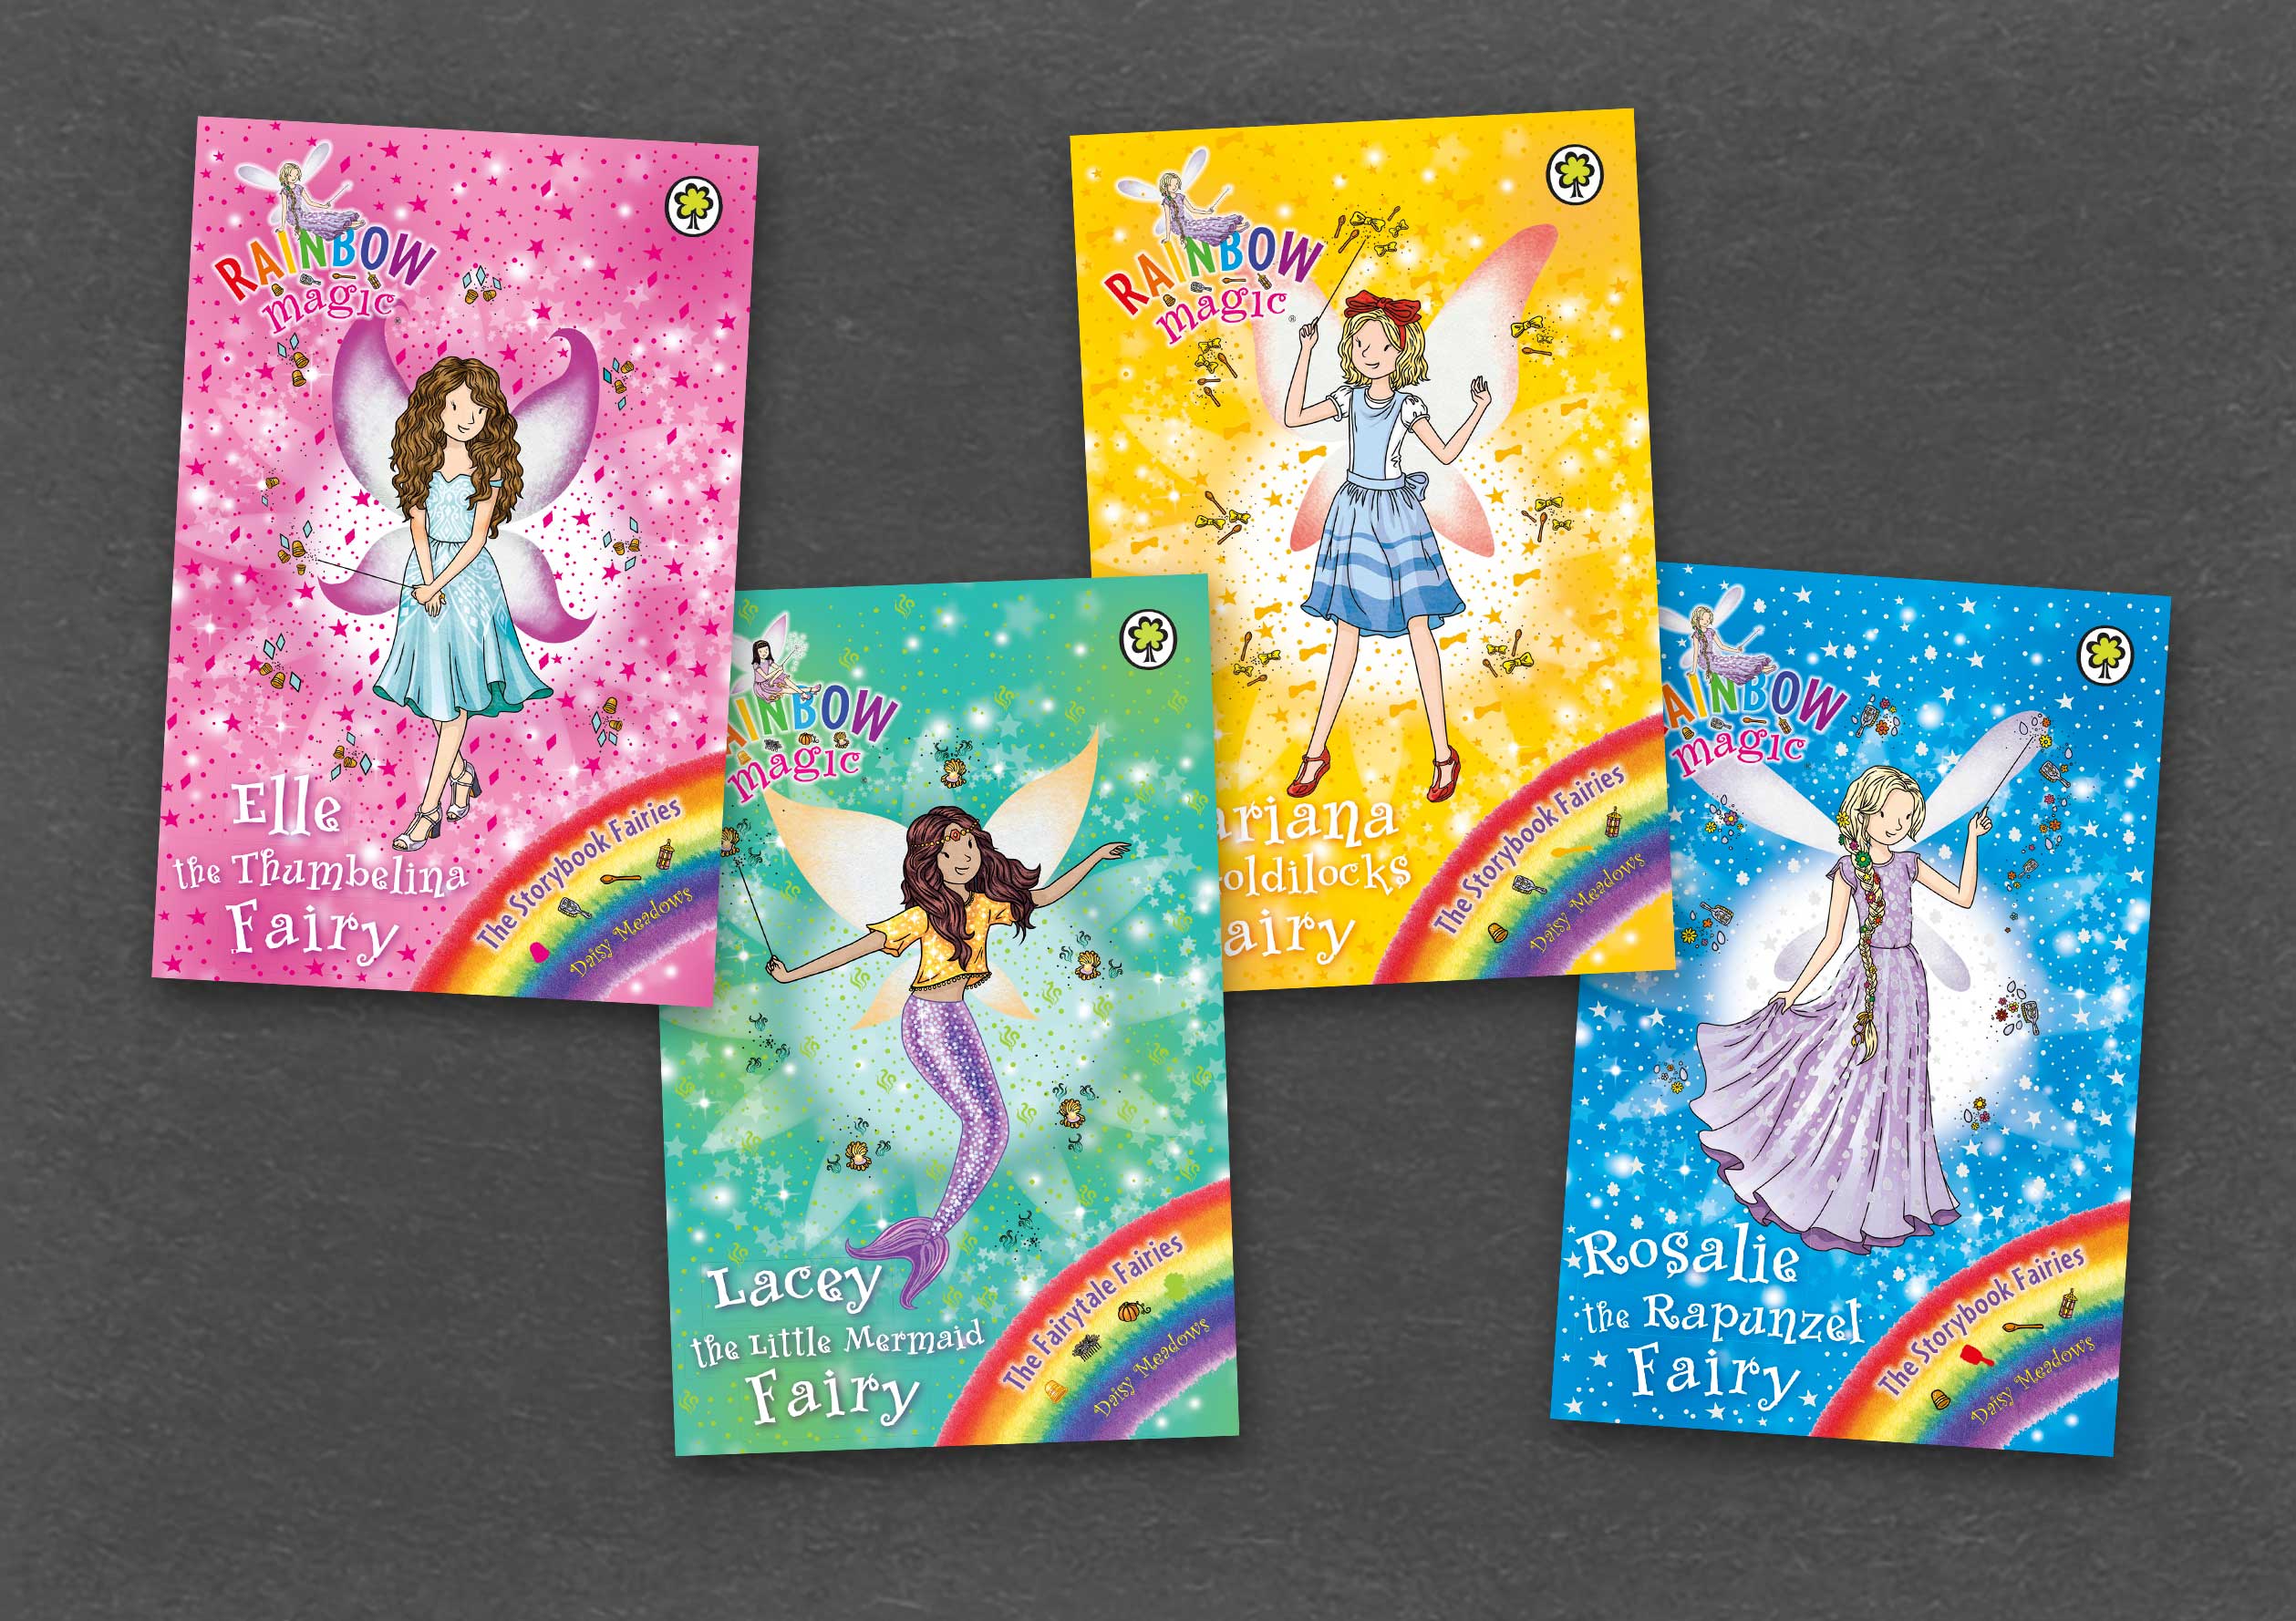 rainbow magic covers